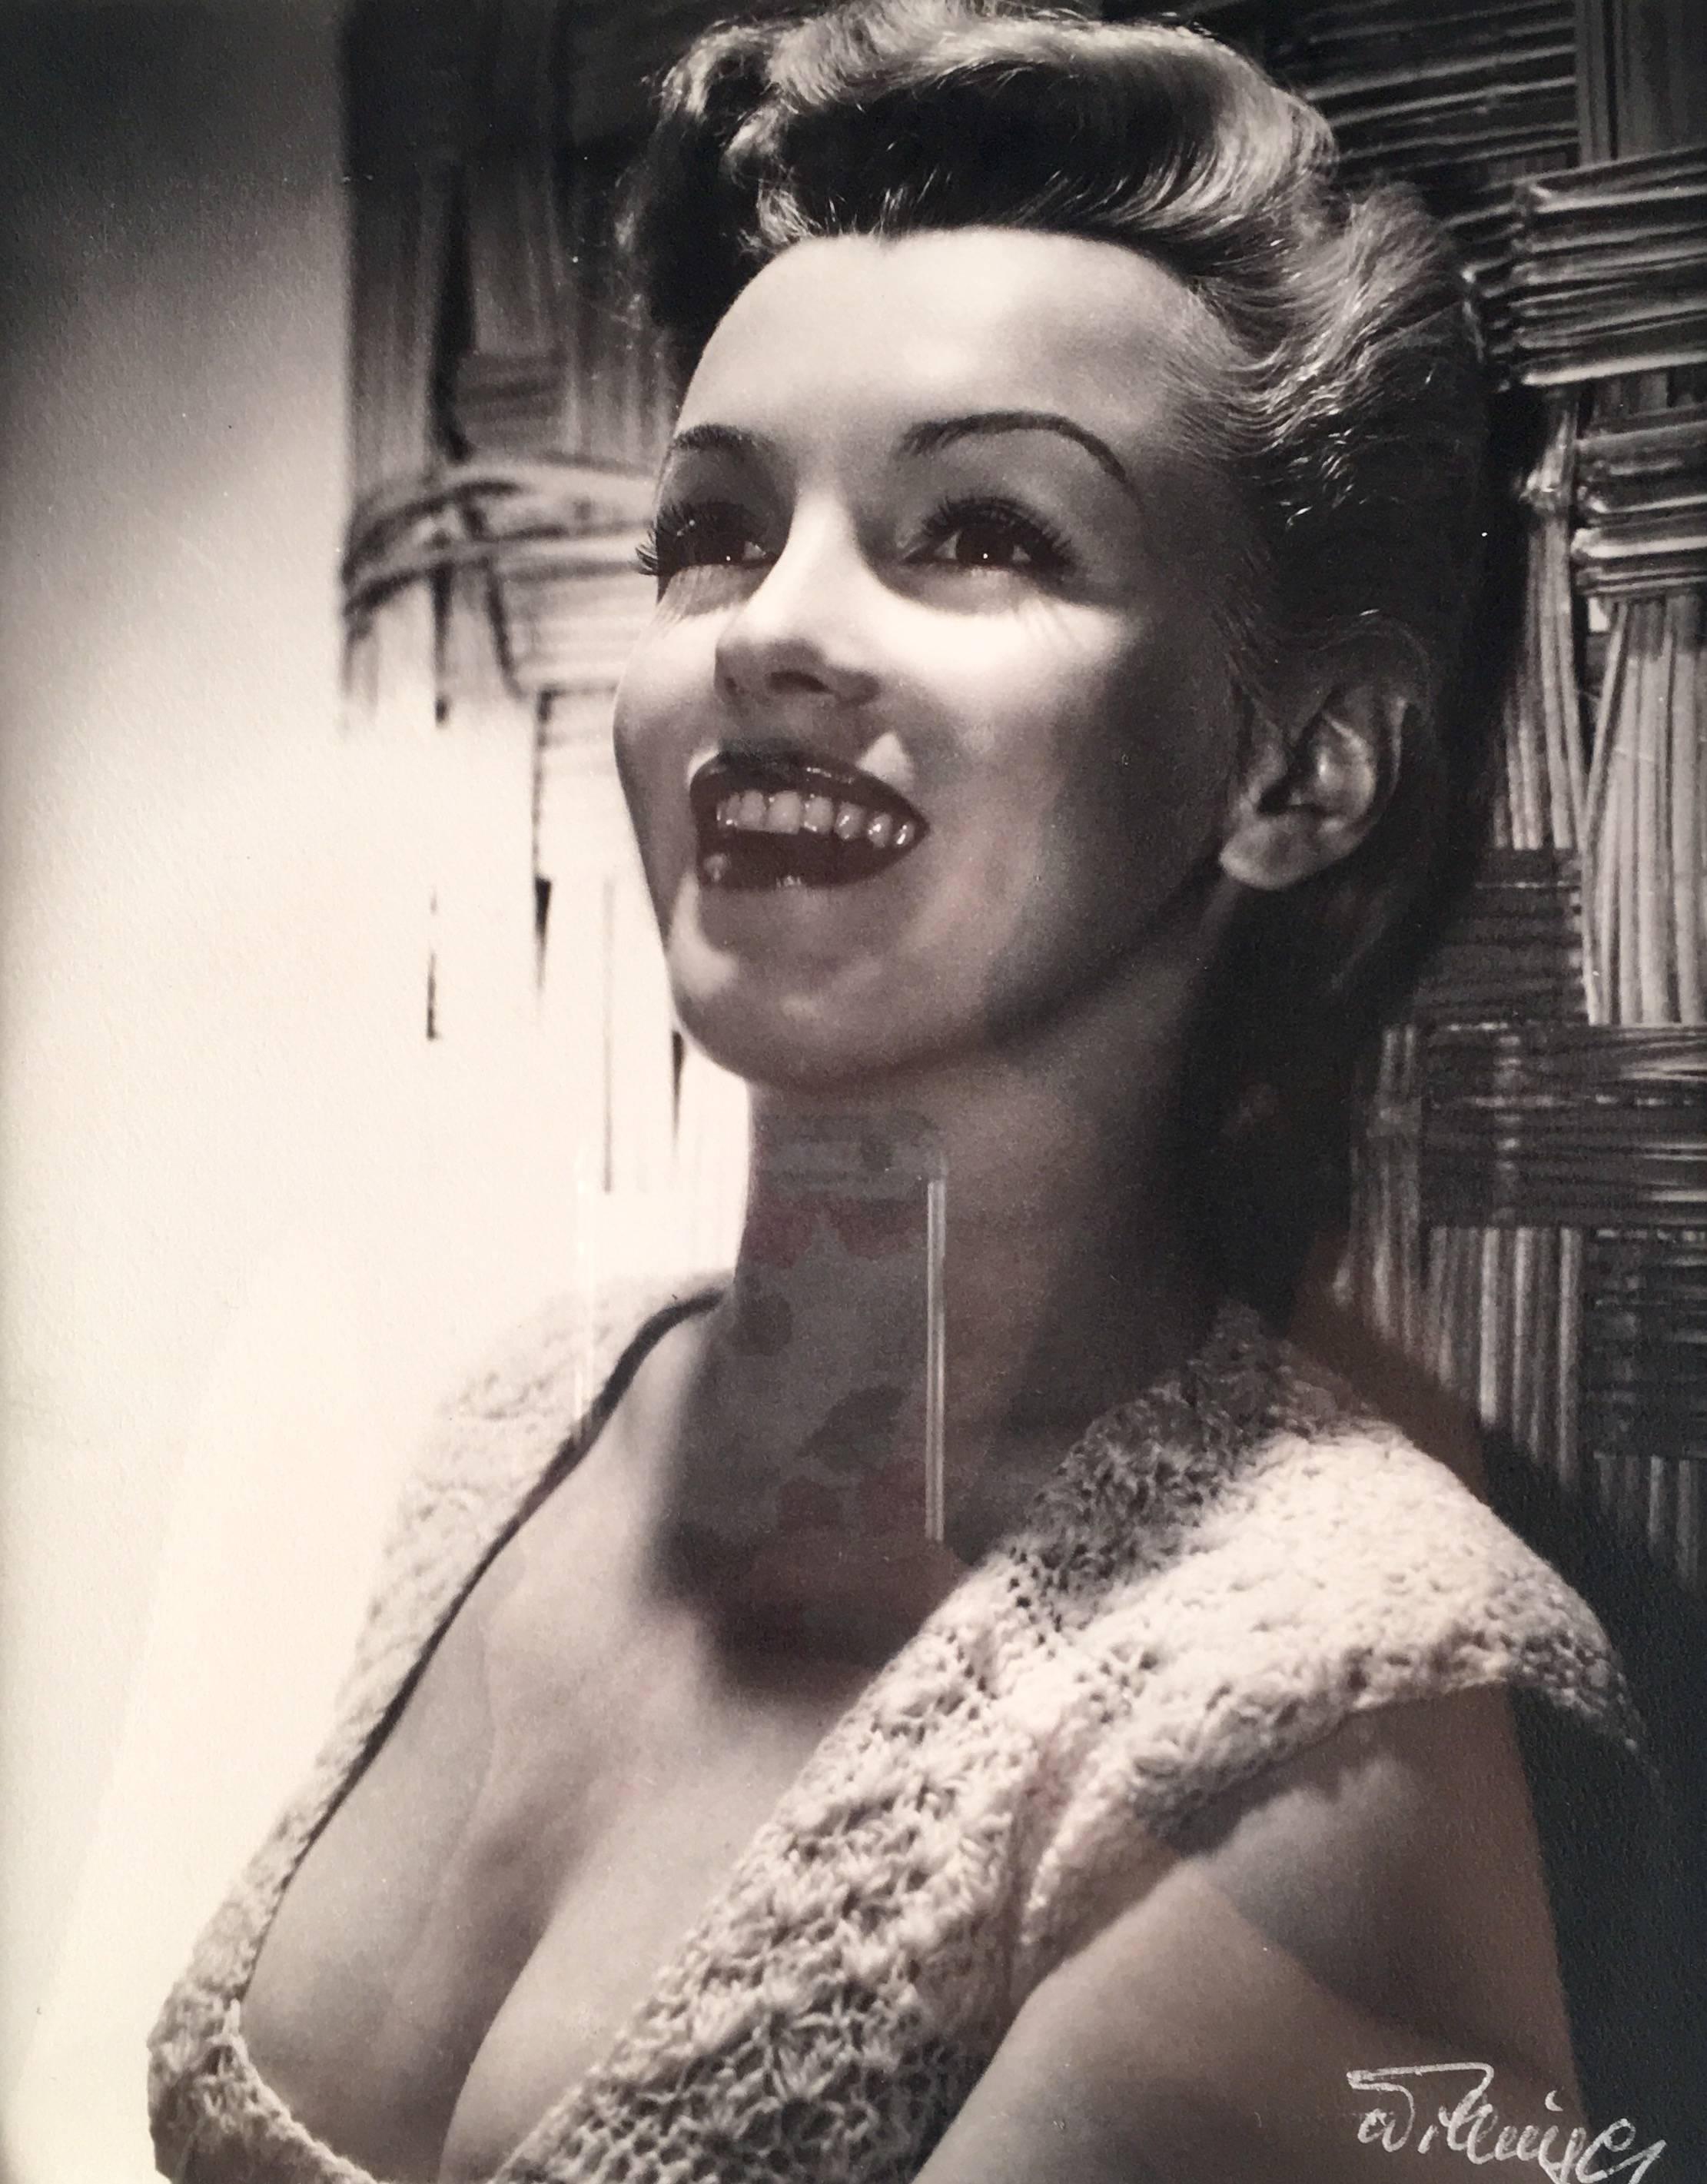 Laszlo Willinger, "Crochet Top", original photograph from original negative